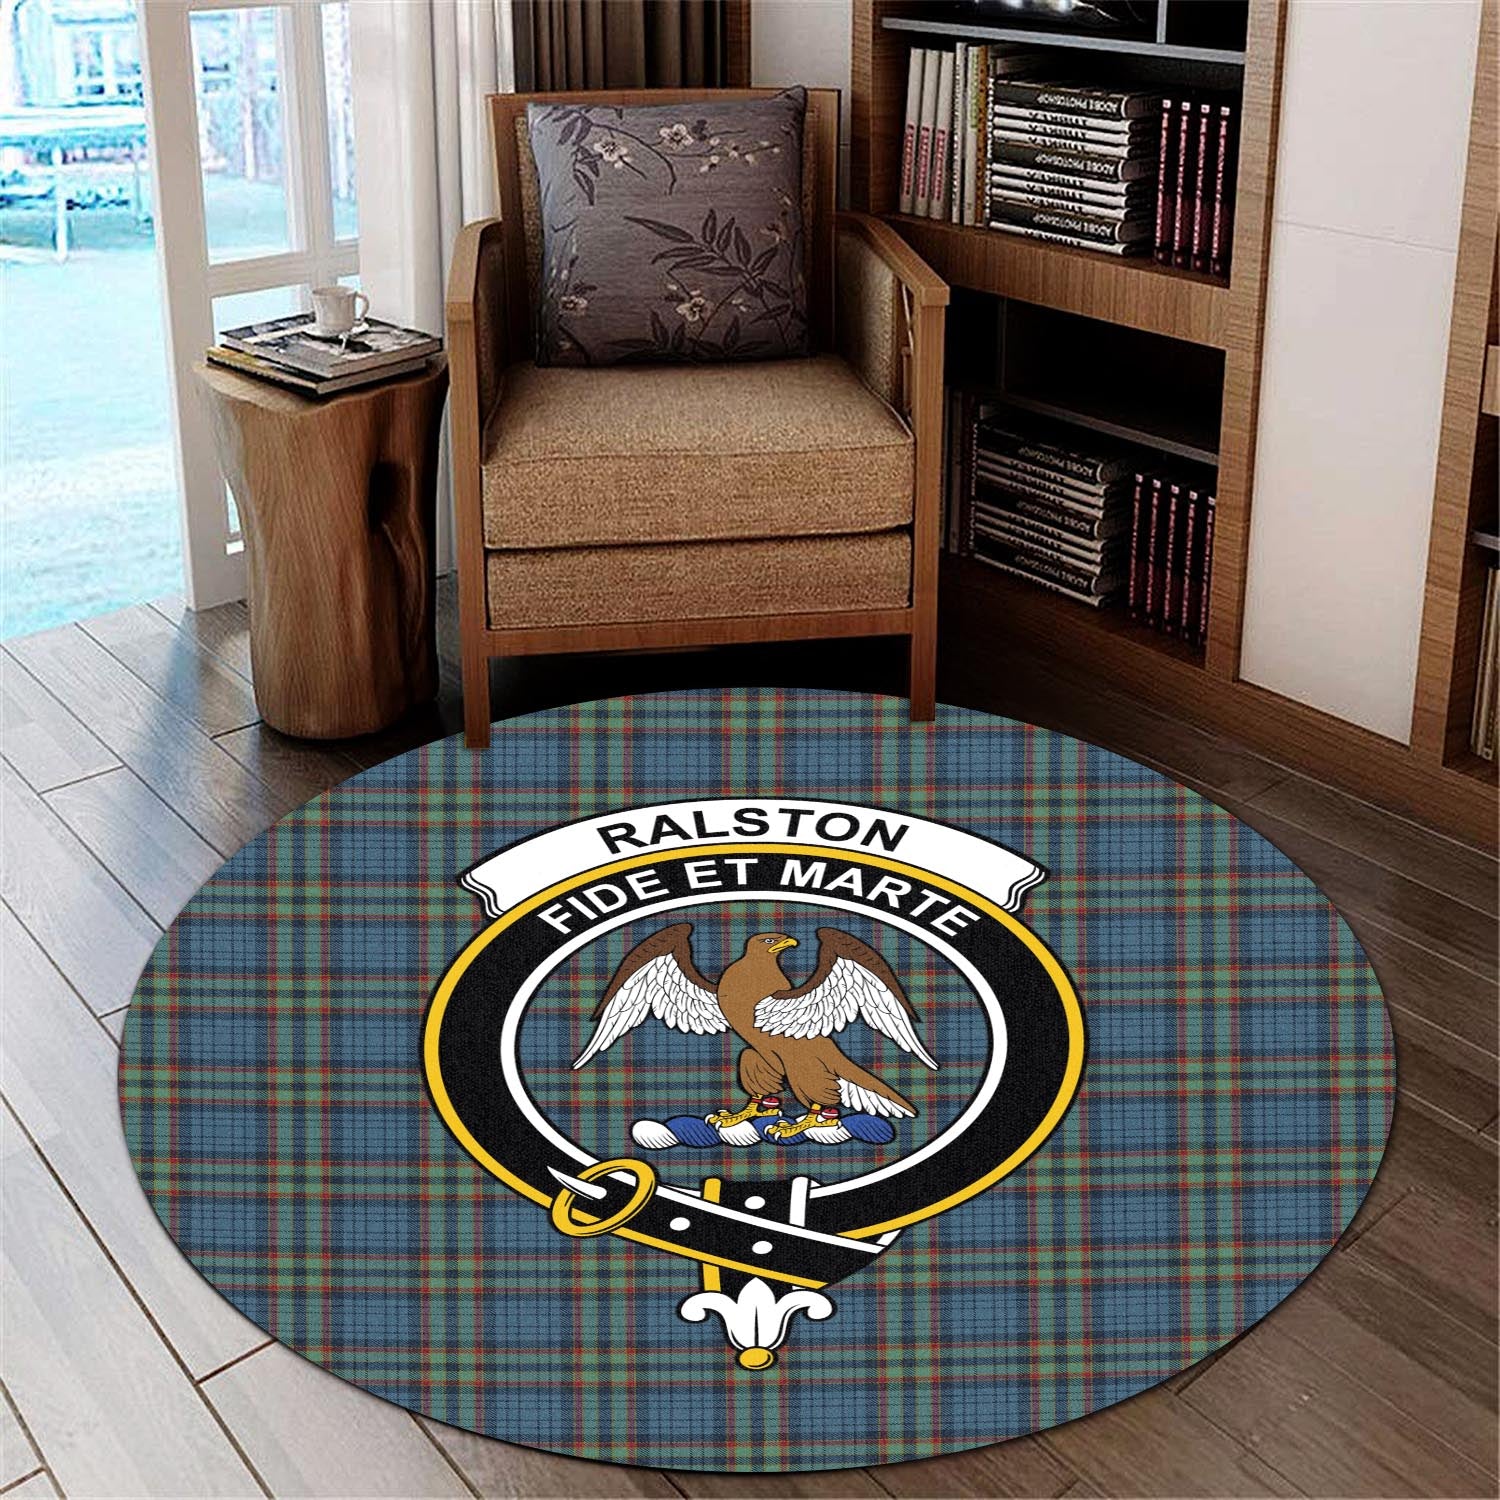 ralston-uk-tartan-round-rug-with-family-crest